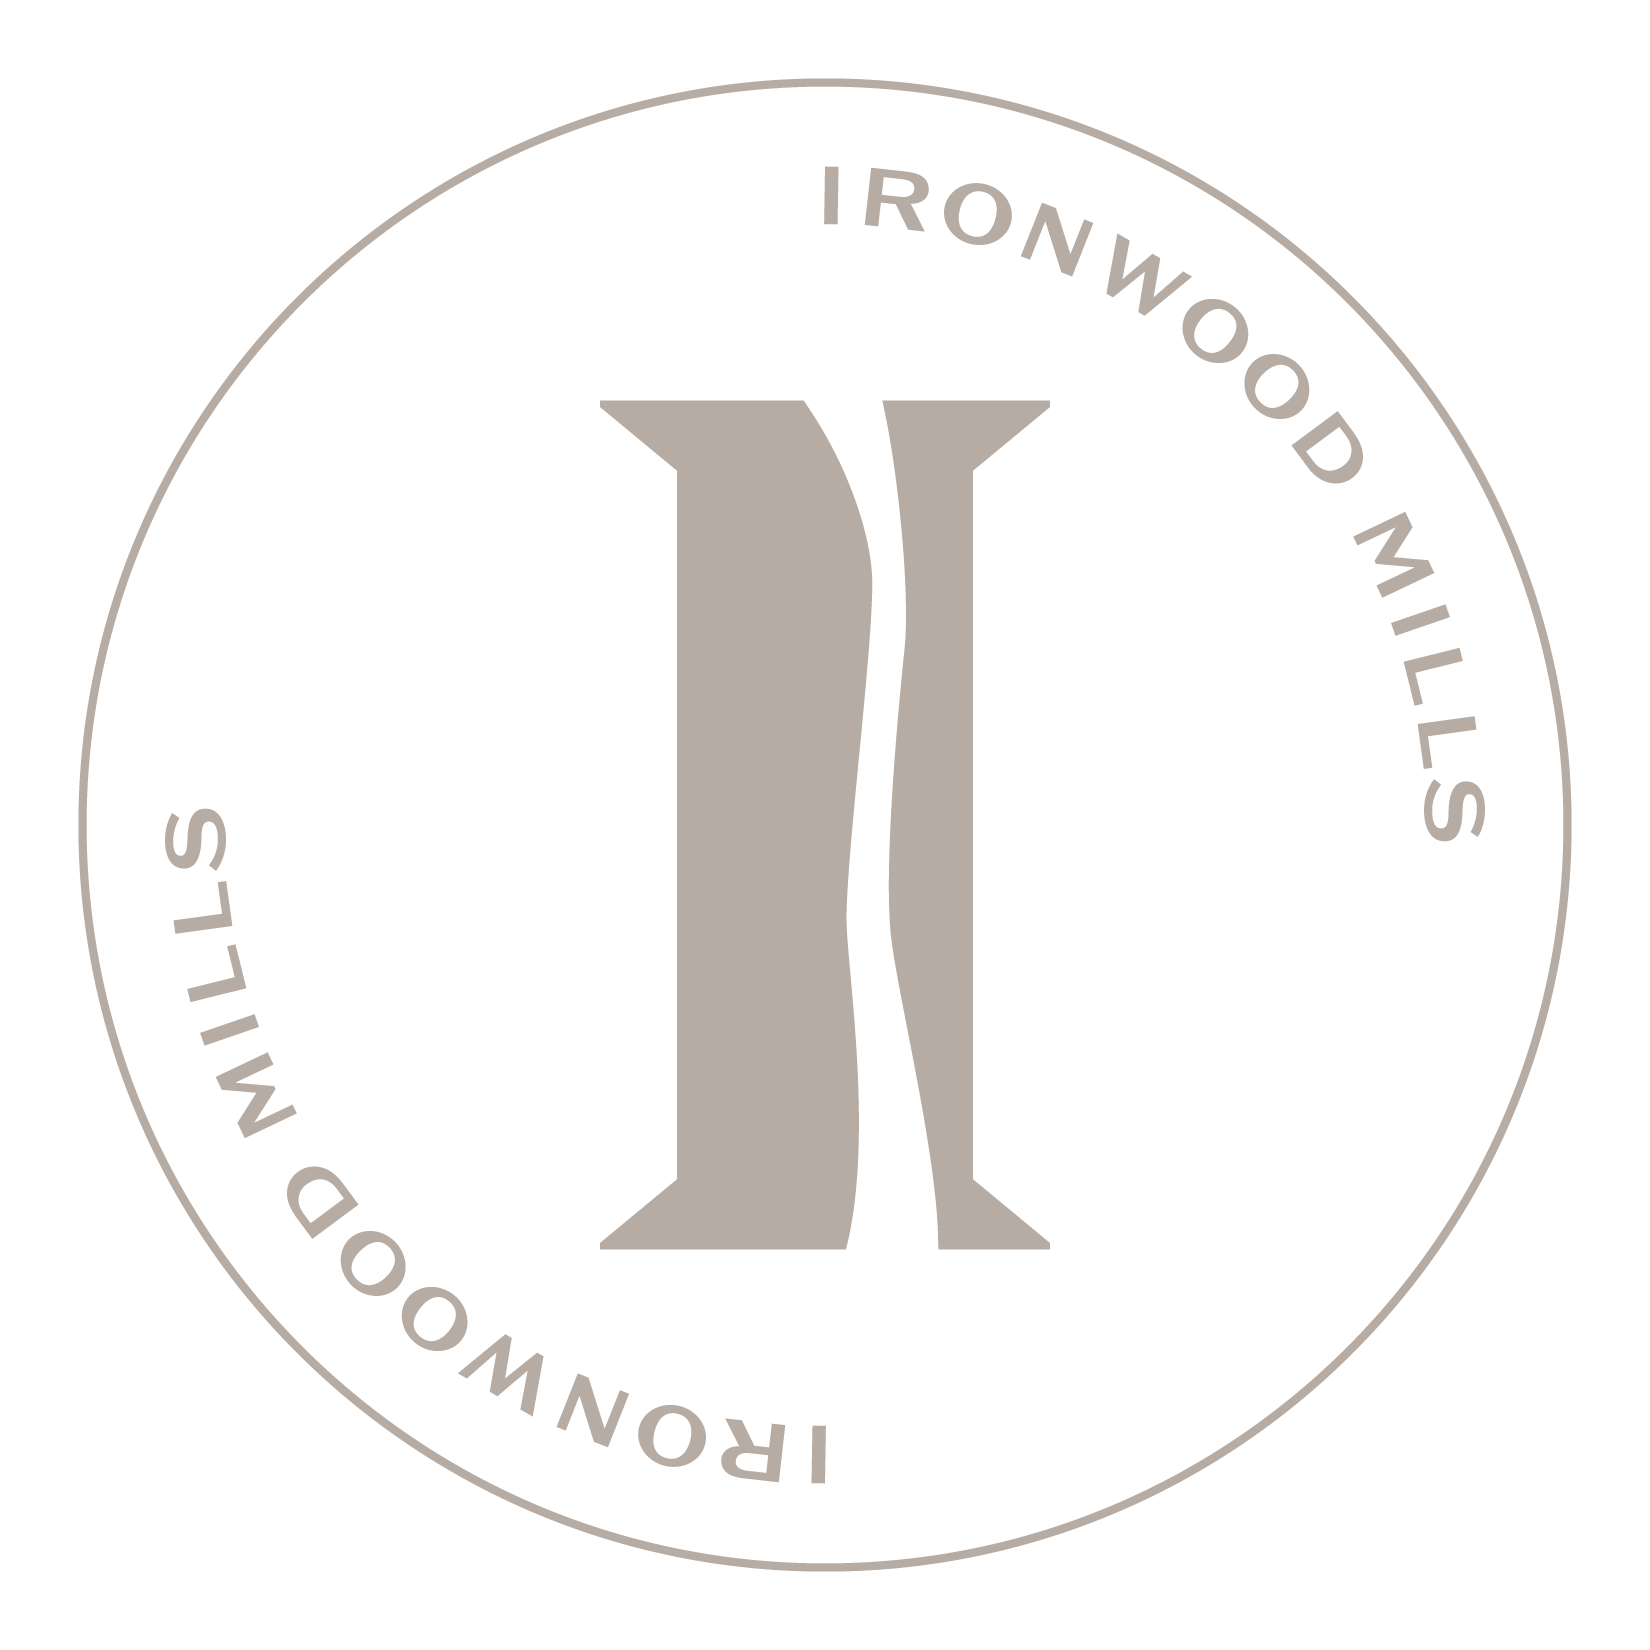 Ironwood Mills Stamp - Ironwood